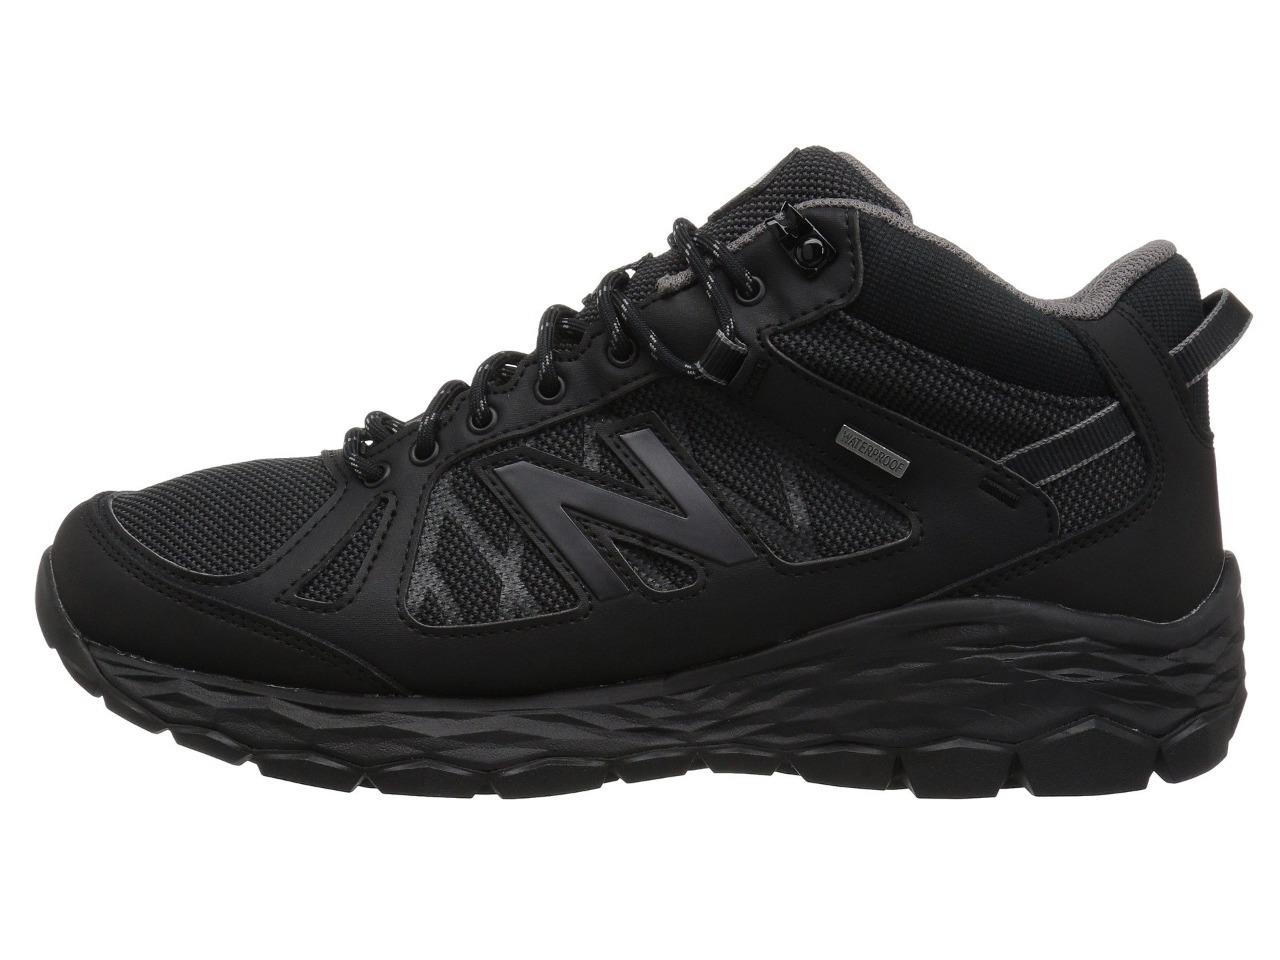 New Men's New Balance 1450 Waterproof Trail Walking Shoes MW1450WK Size ...